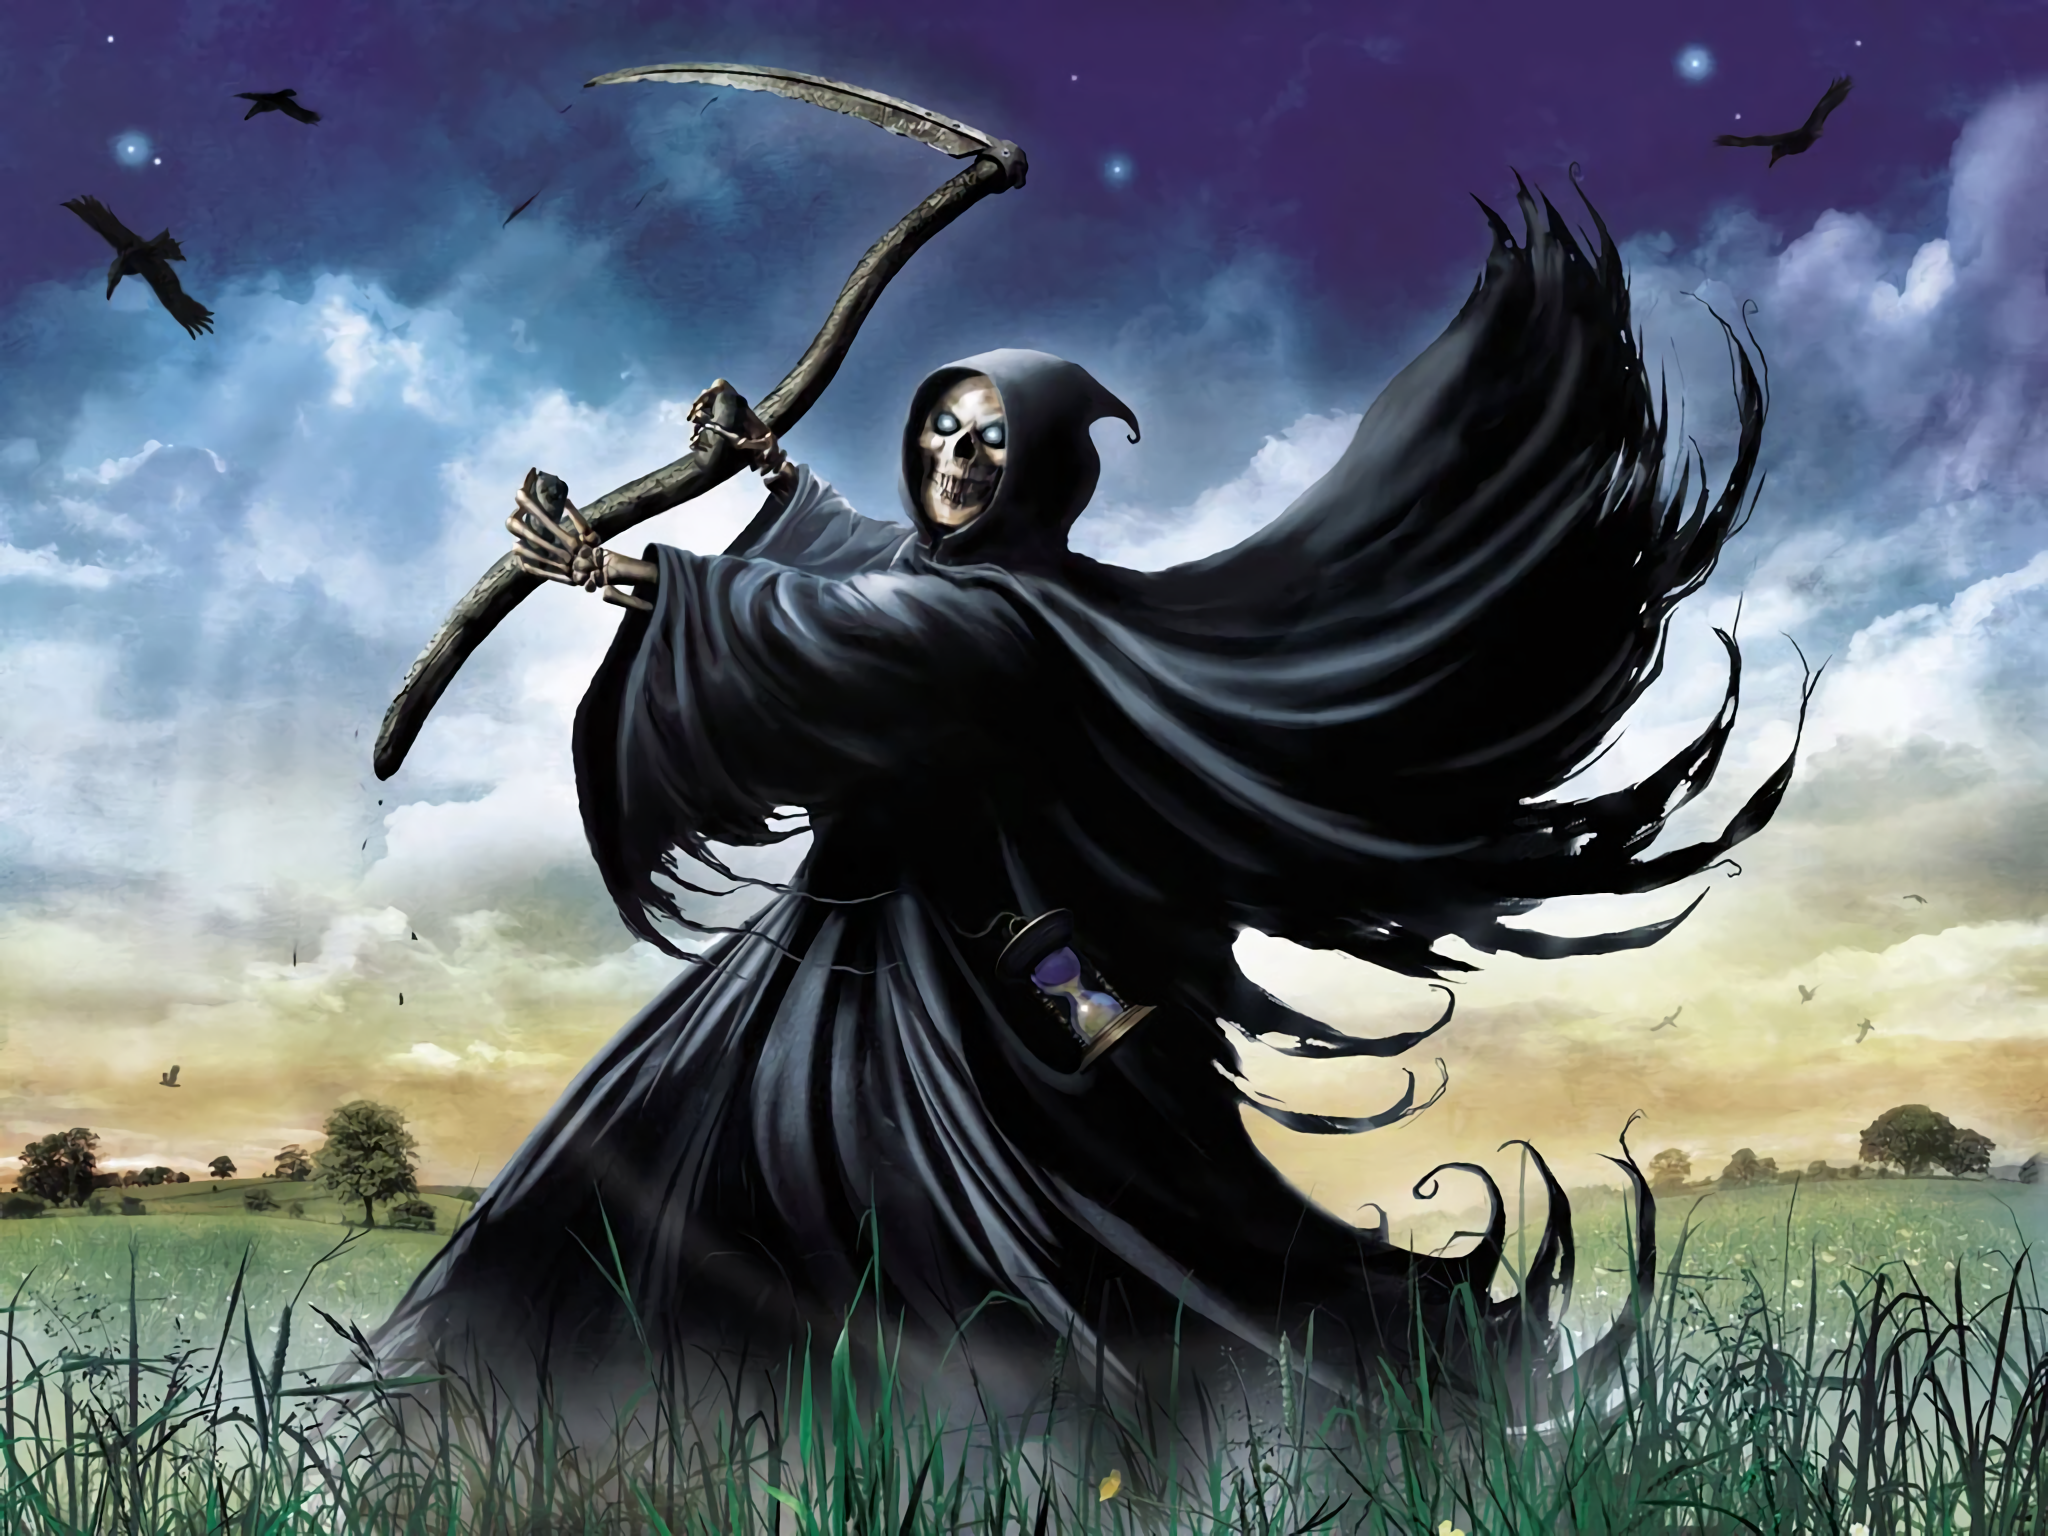 wallpaper reaper,cg artwork,fictional character,illustration,mythology,mythical creature